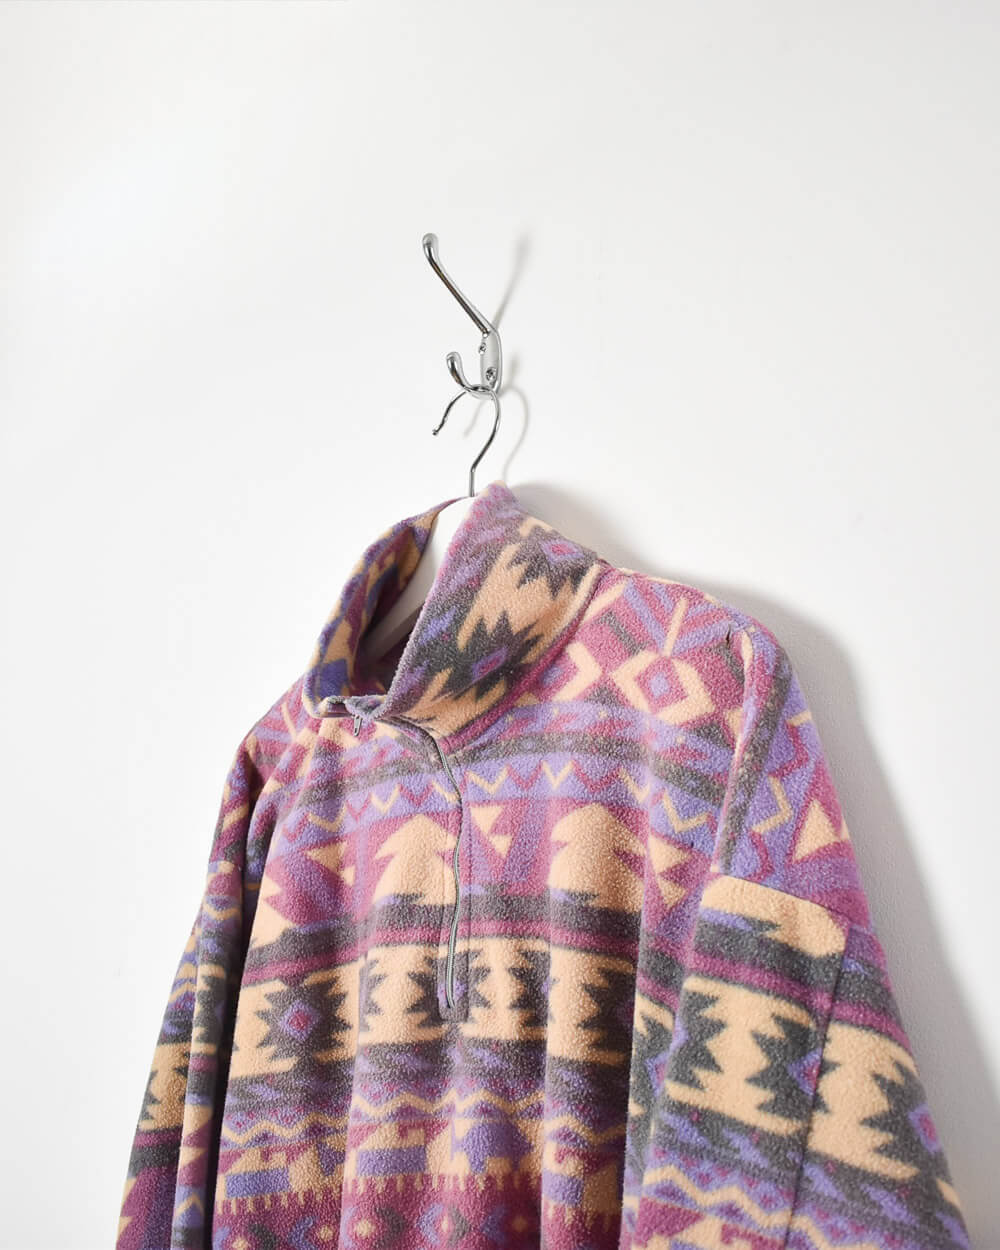 Purple Vintage 1/4 Zip Patterned Fleece - Medium